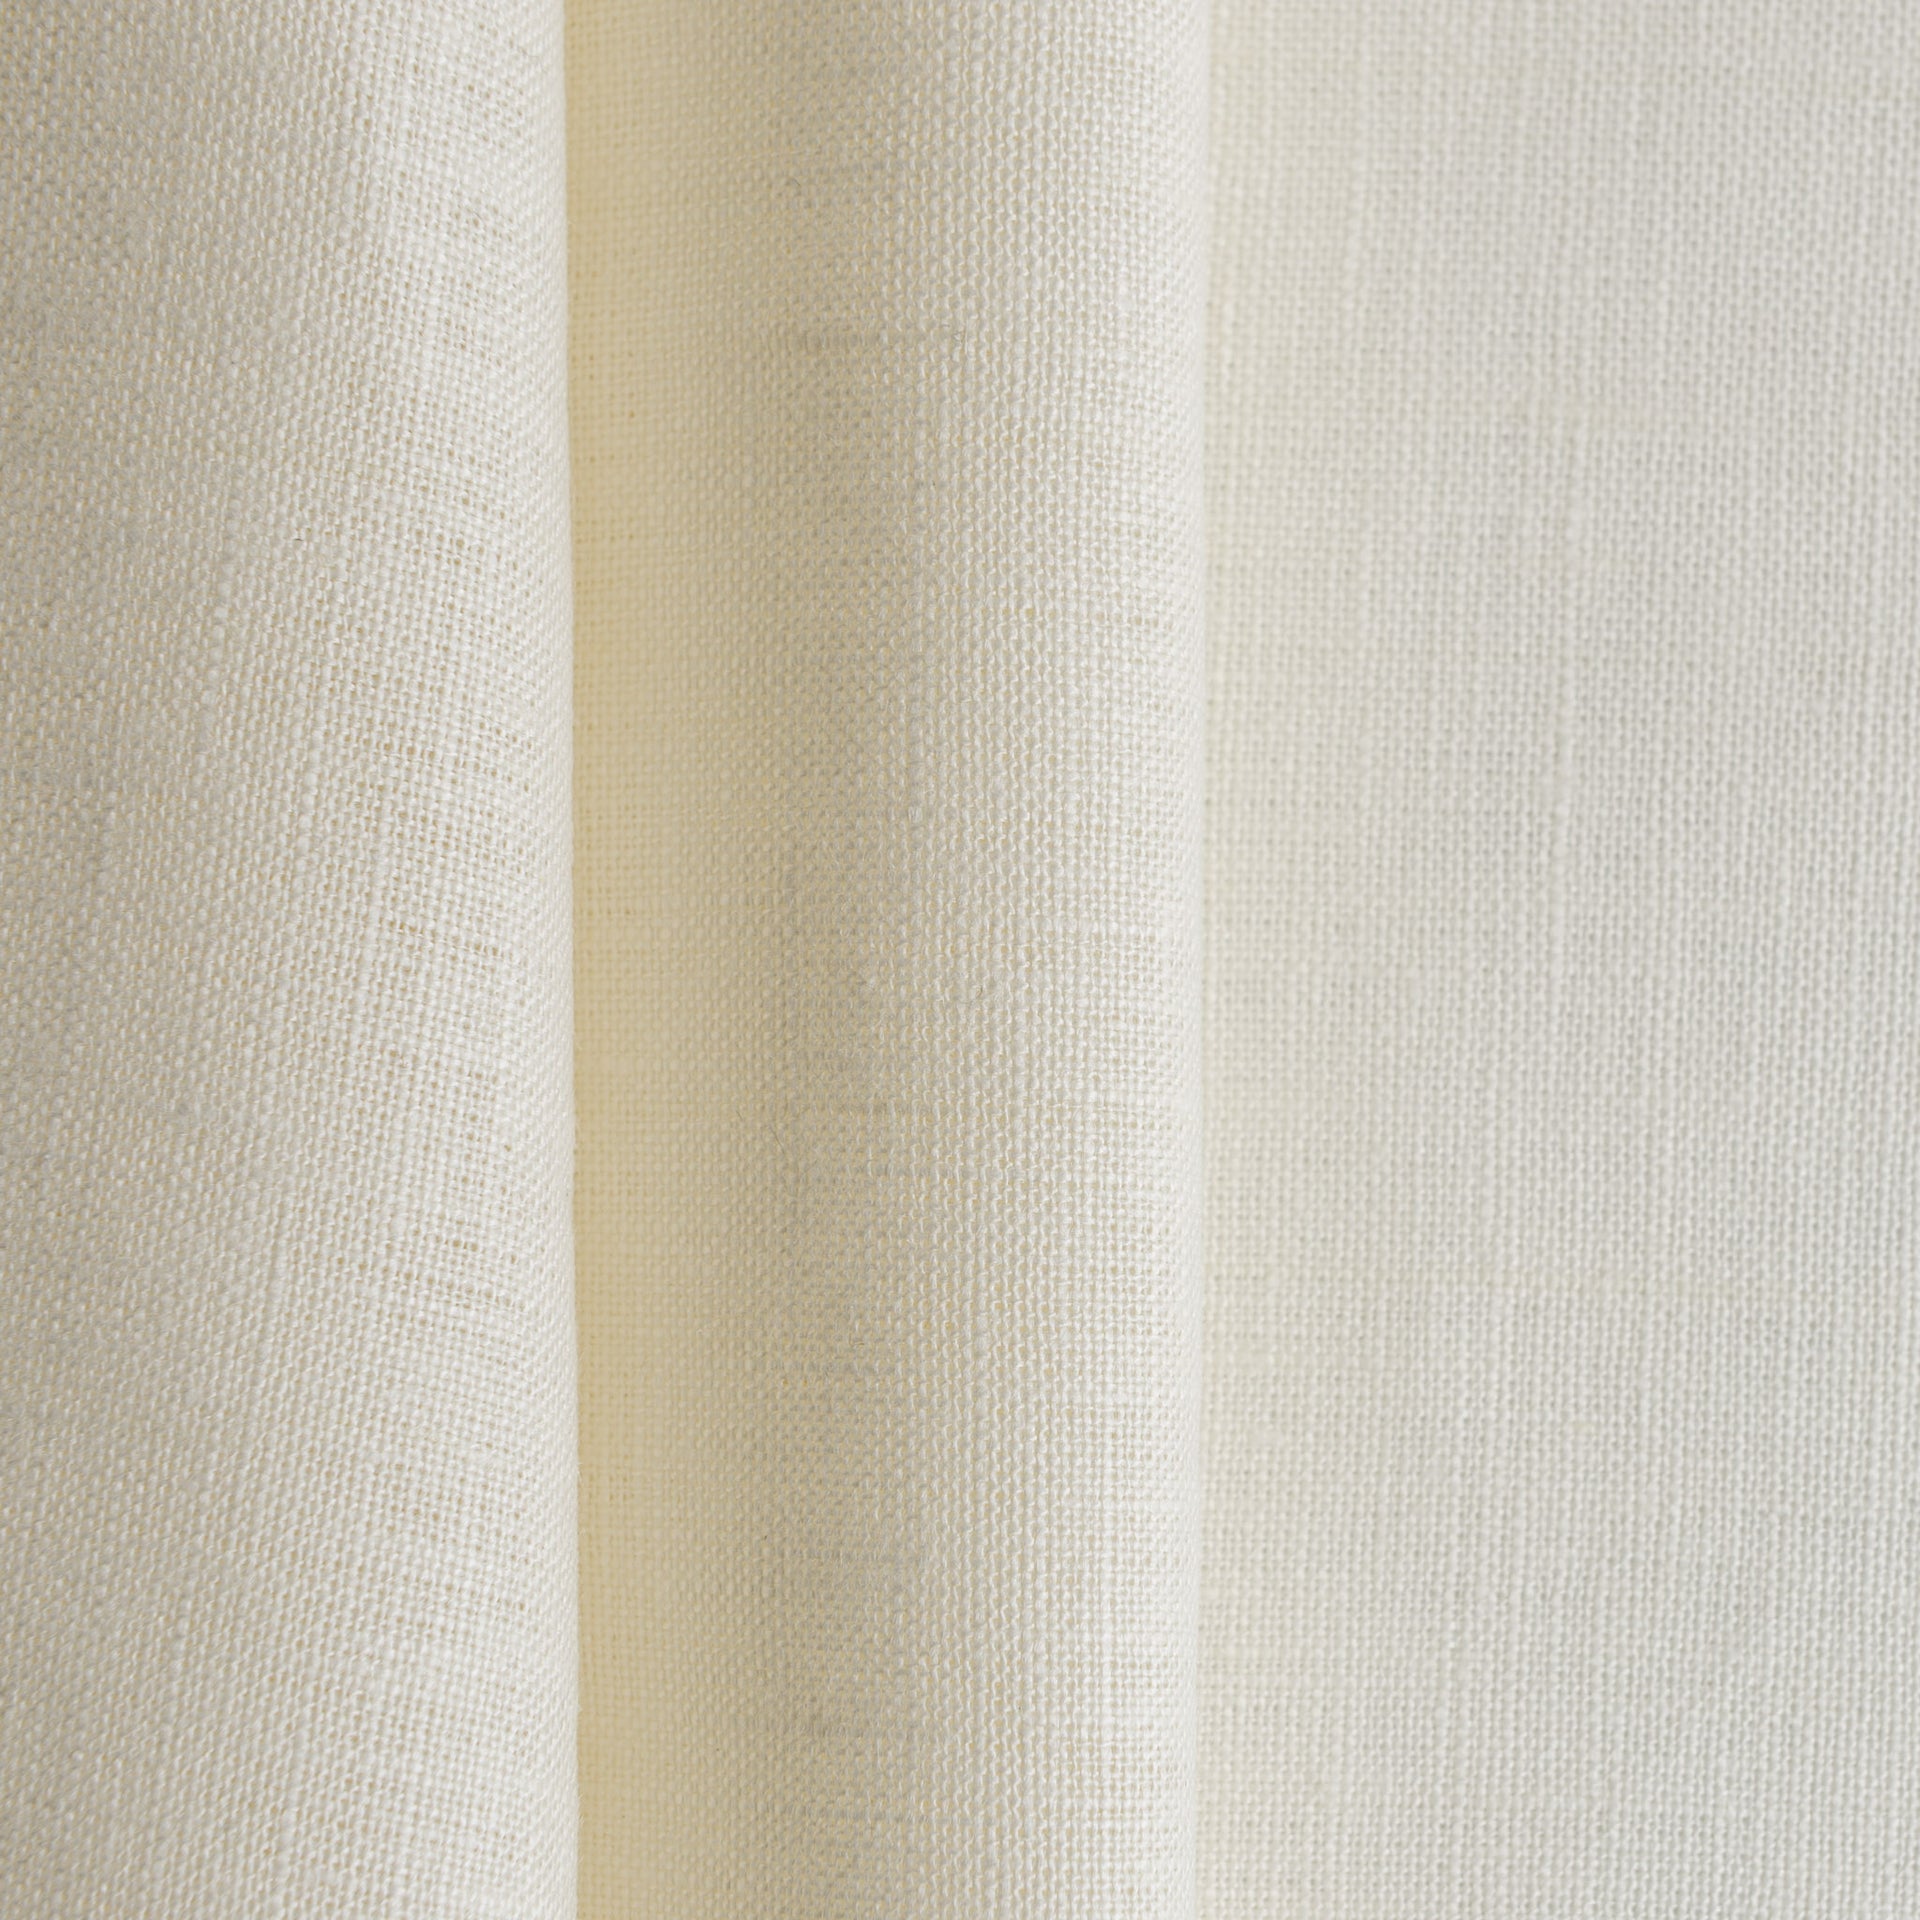 Cream Linen Back Tab Curtain Panel with Blackout Lining - Custom Width, Custom Length, Color: Cream